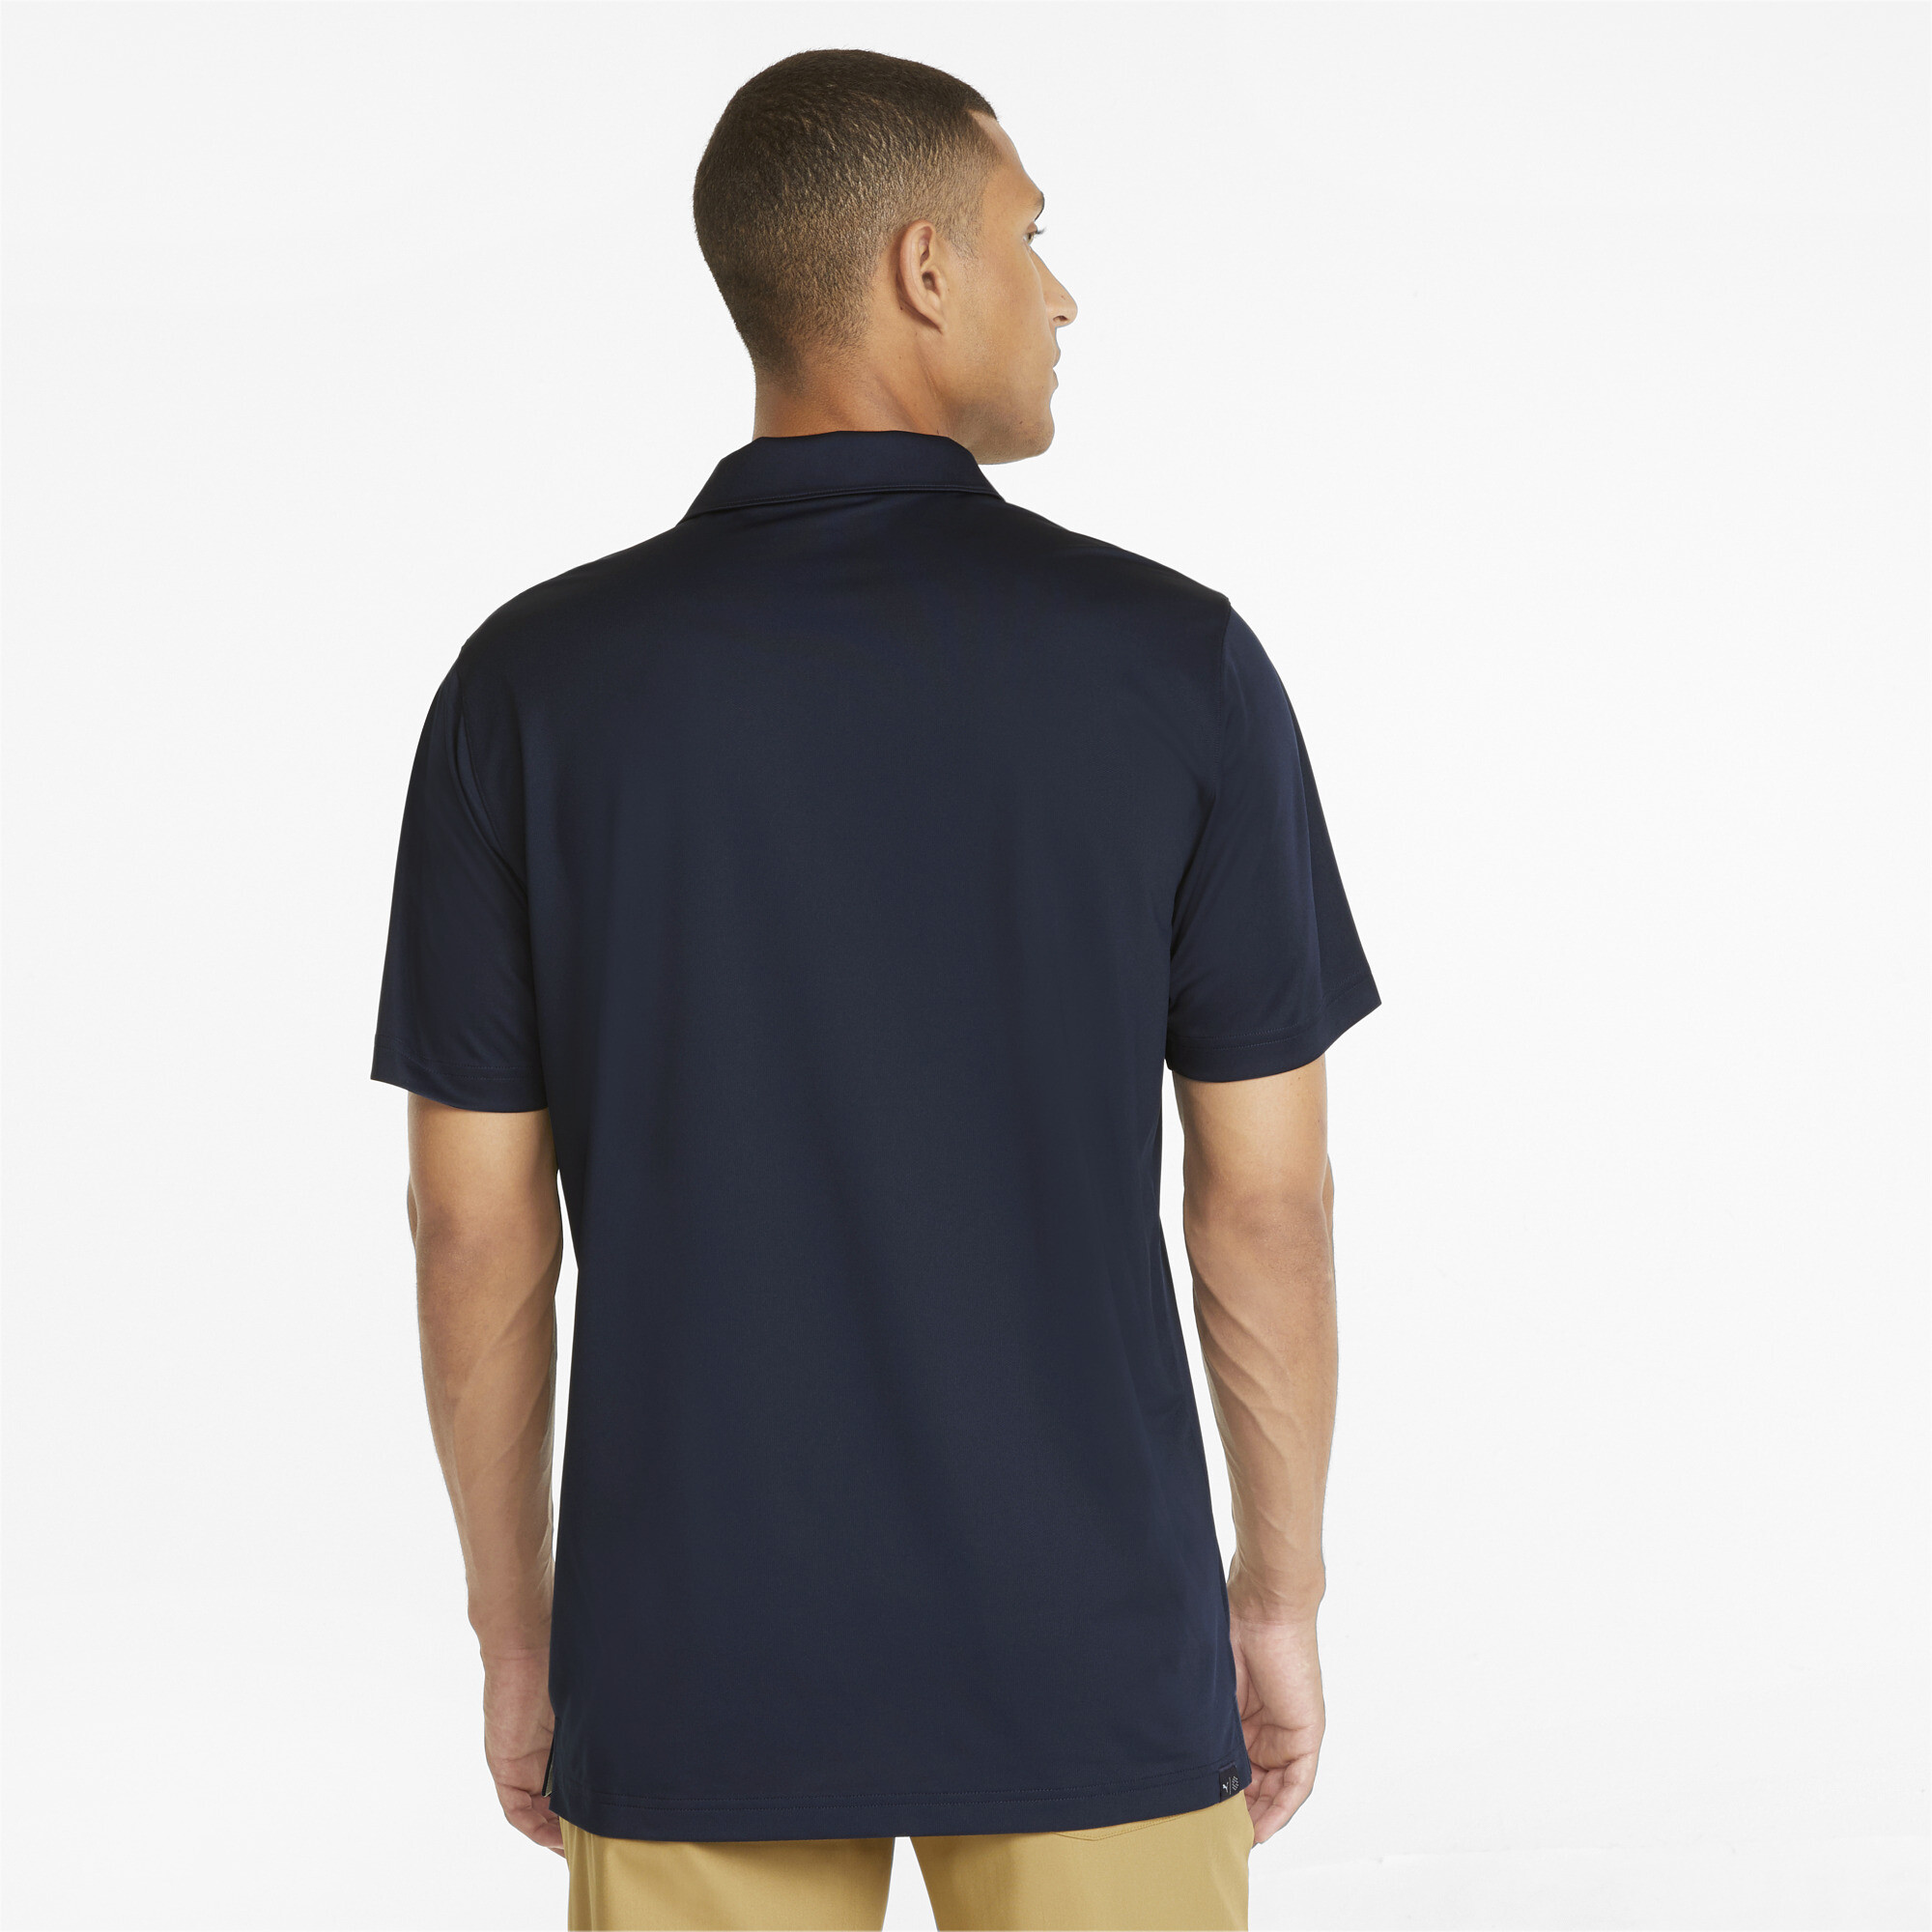 Men's Puma Gamer's Golf Polo Shirt T-Shirt, Blue T-Shirt, Size 5XL T-Shirt, Clothing